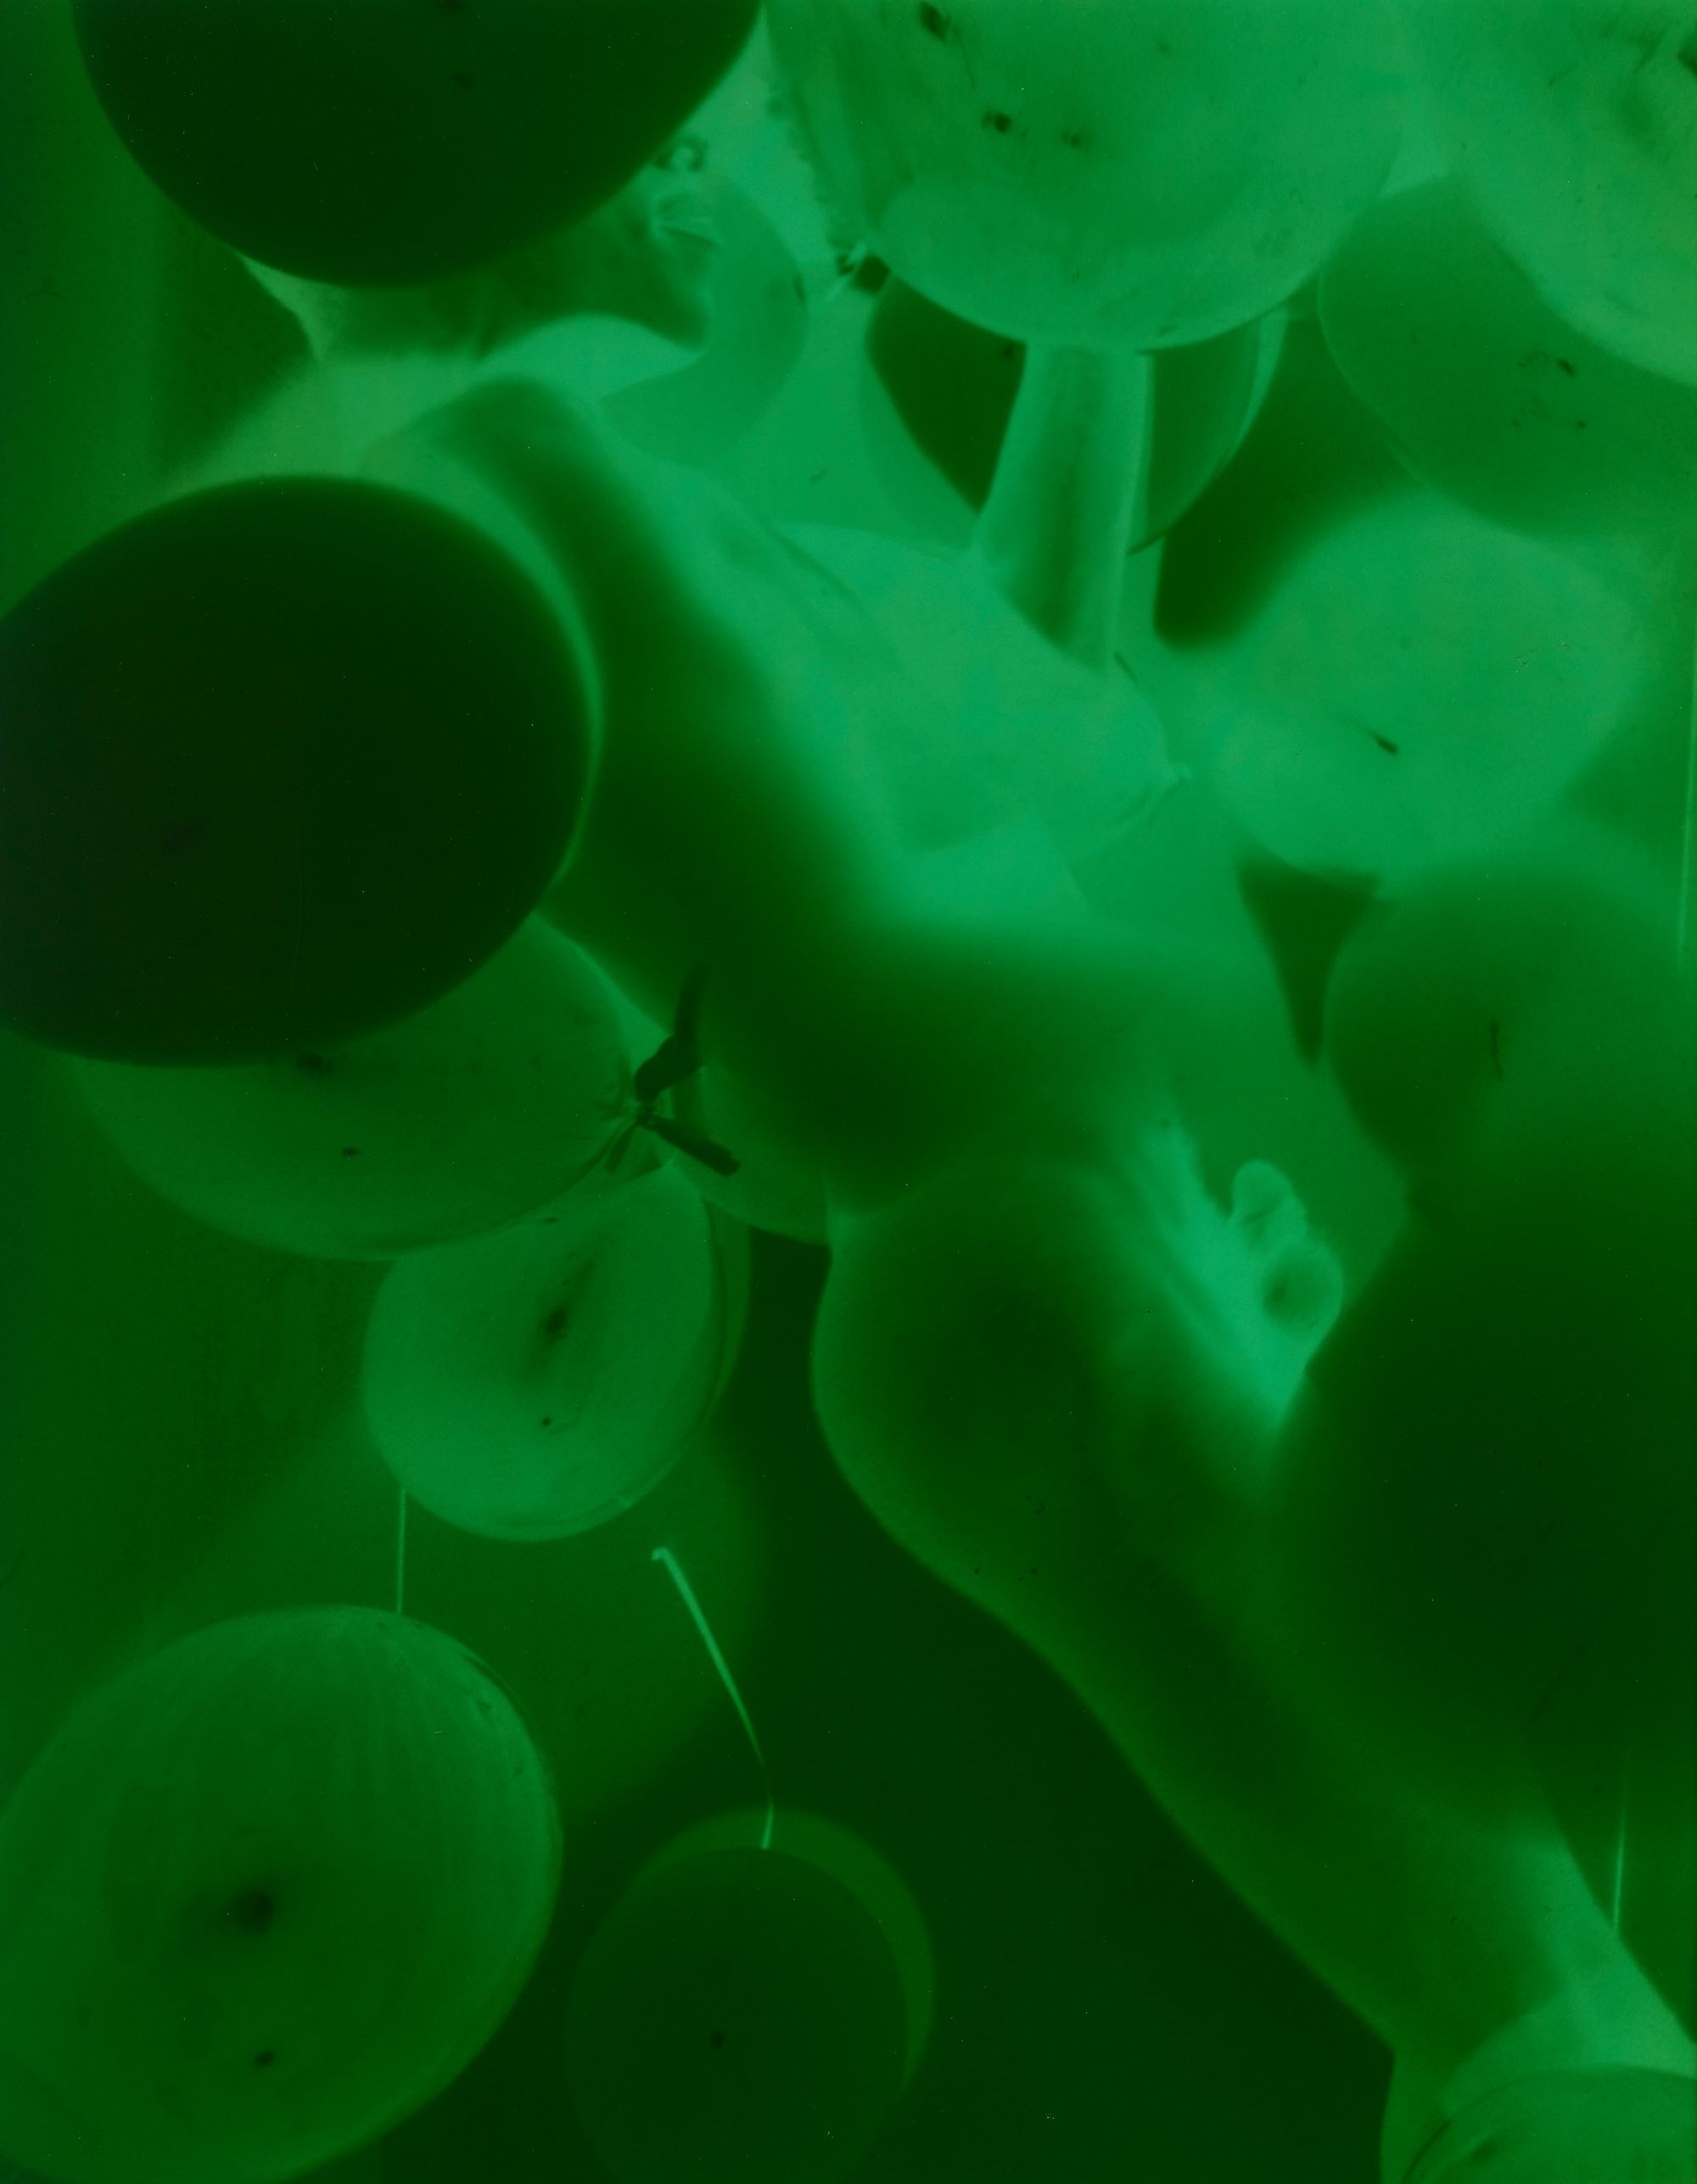 Green balloons surrounding a plastic body